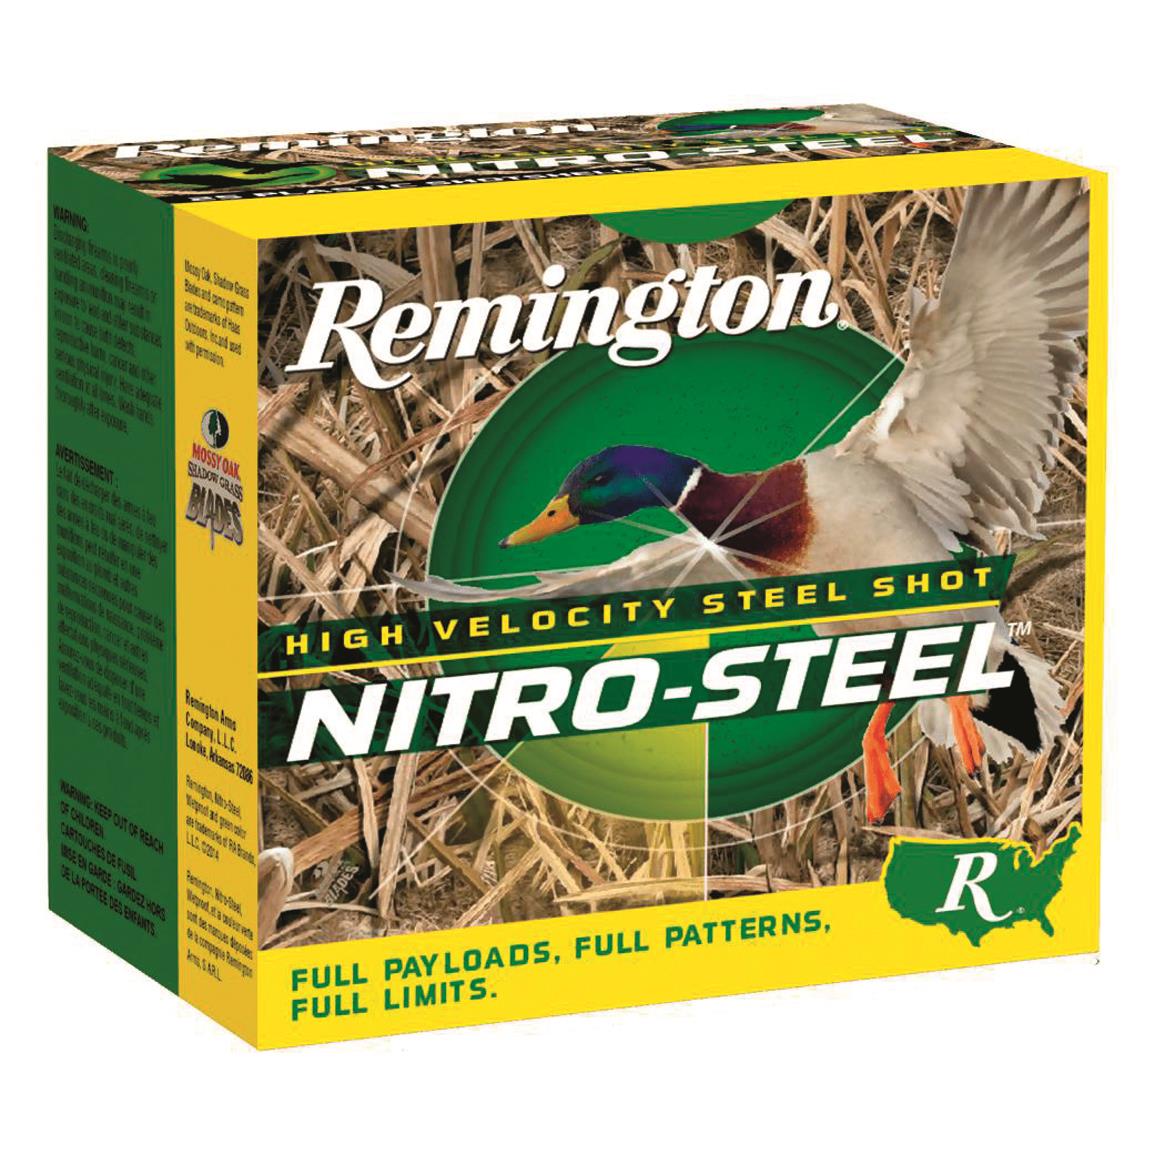 Remington Nitro-Steel High-Velocity, 12 Gauge, 3", 1 1/4 oz., 250 Rounds